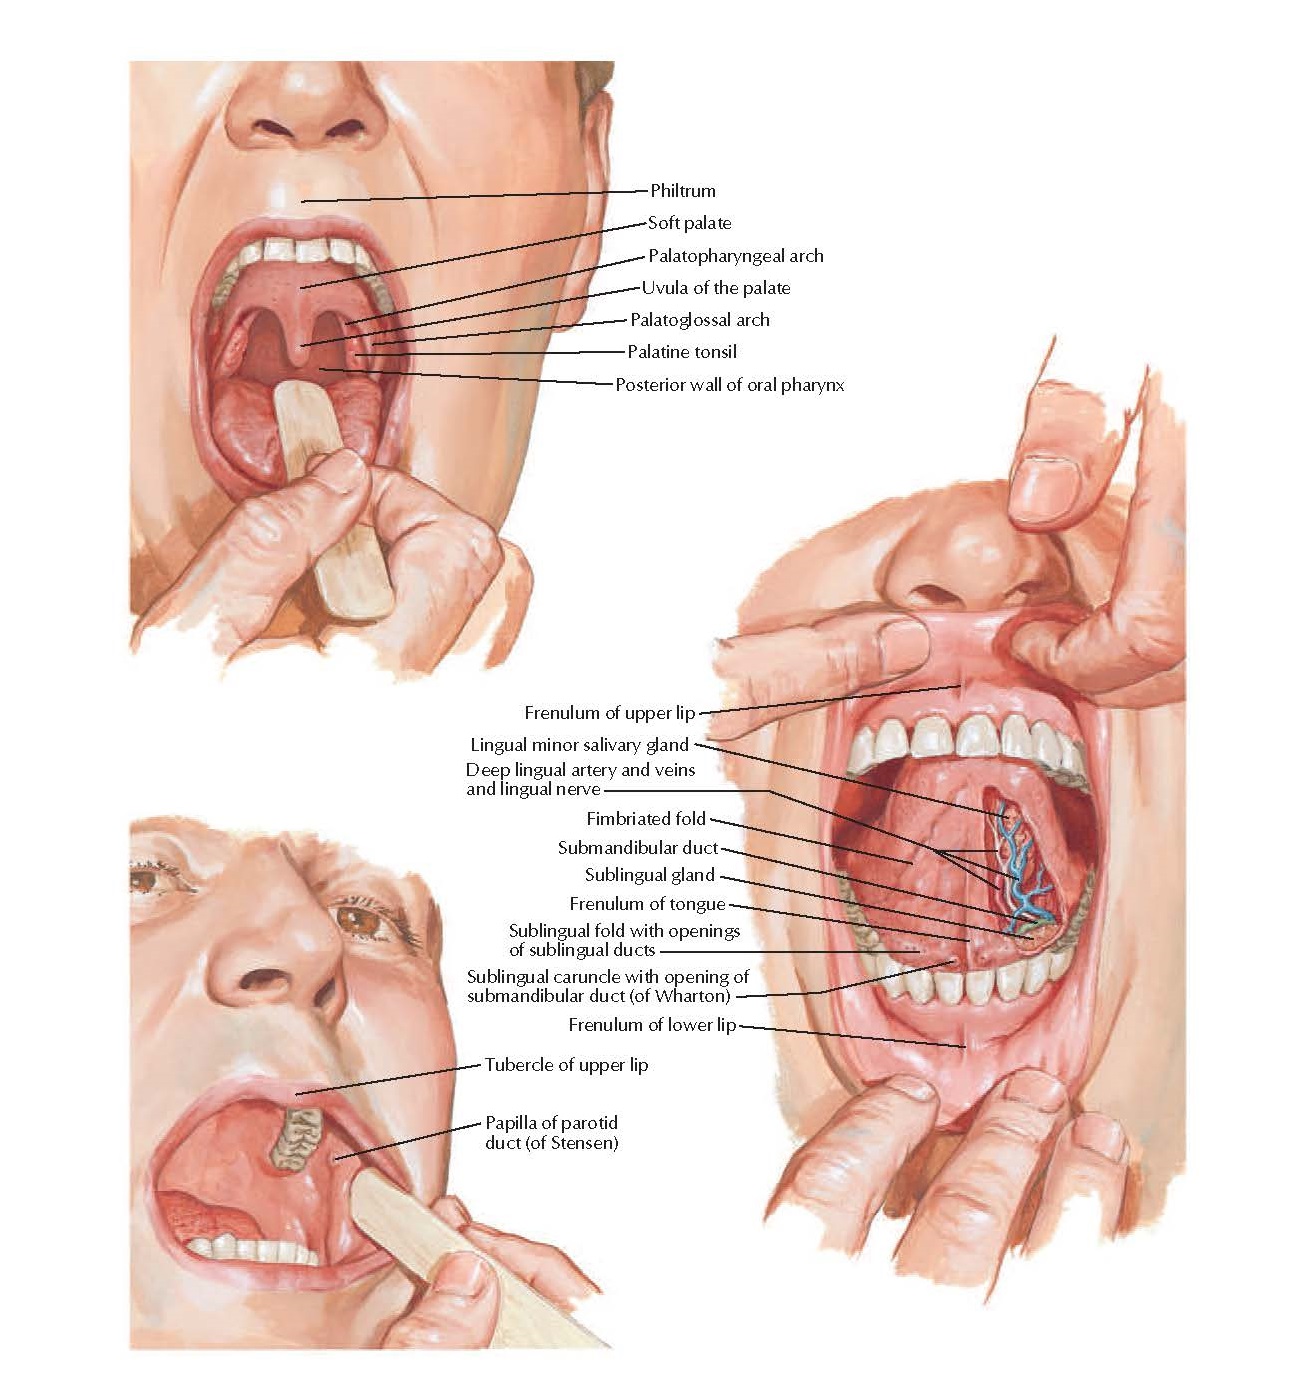 Fimbriated fold of tongue pain